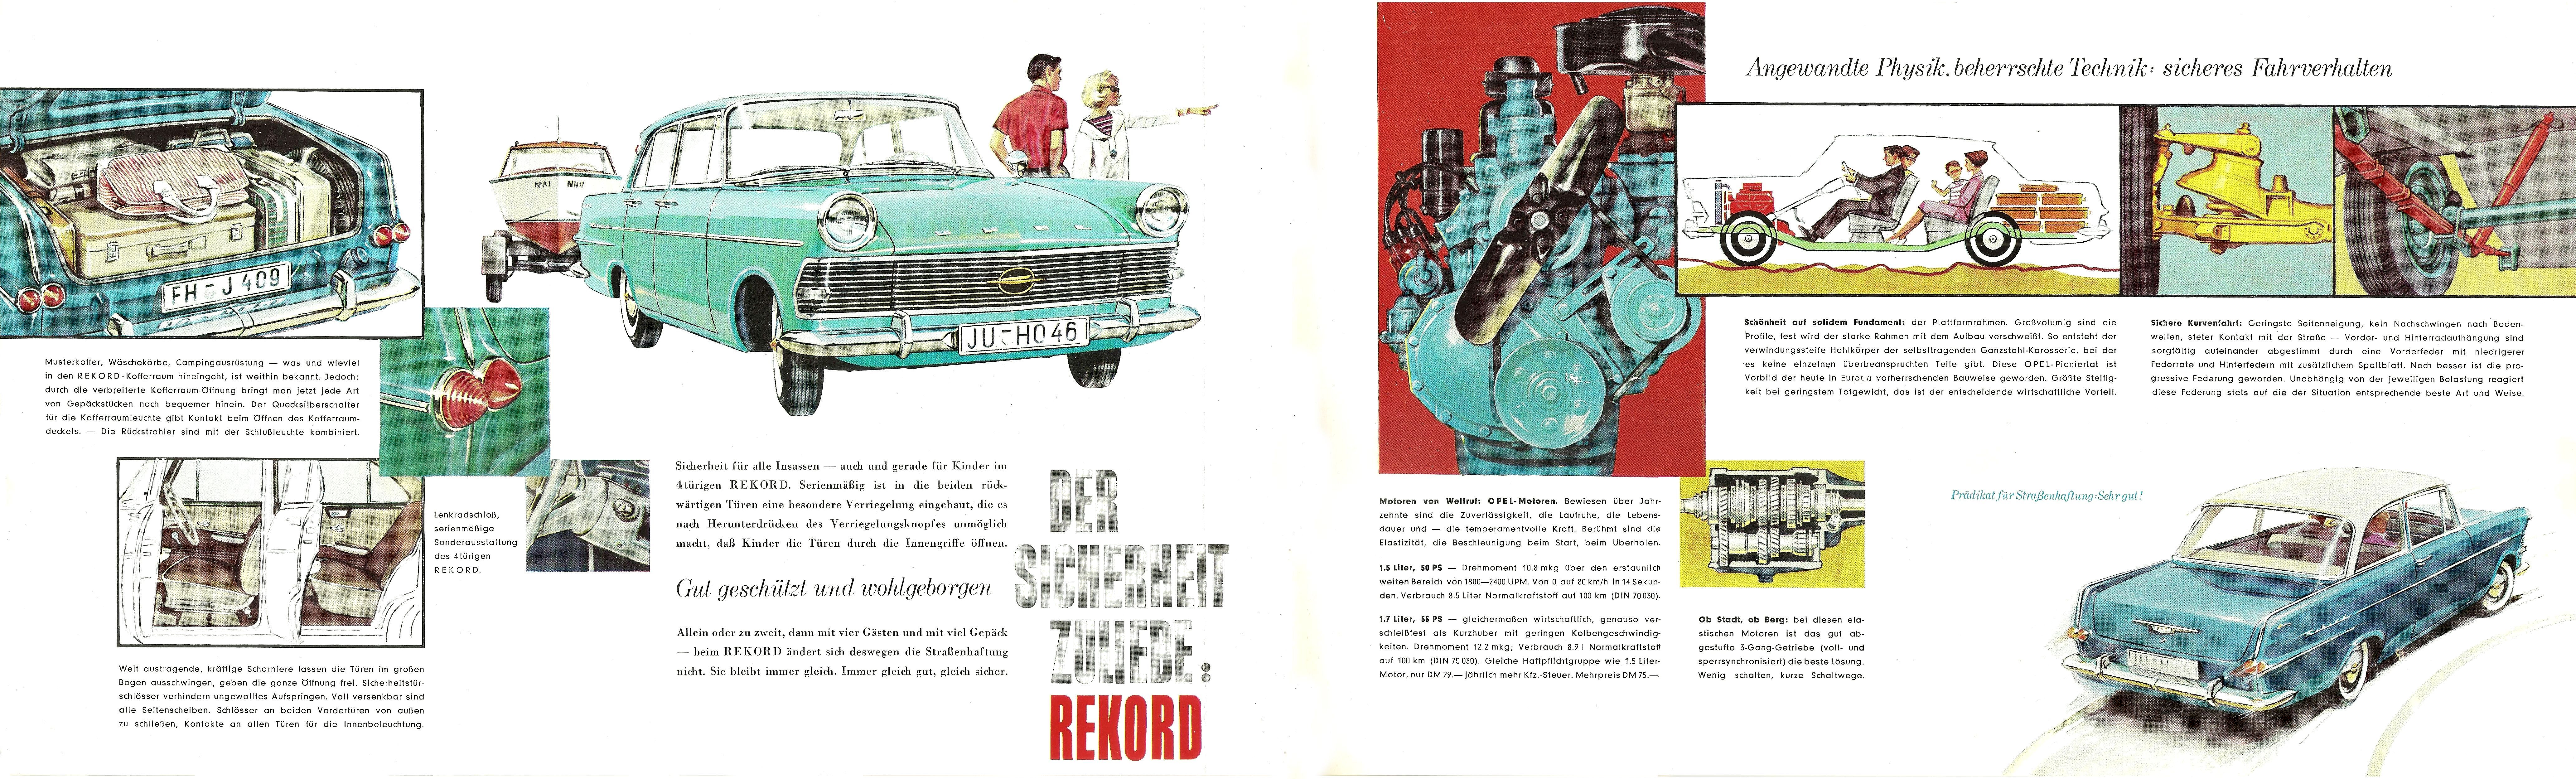 a1024 Opel record p2 prospectus fac-similé Archive Verlag 